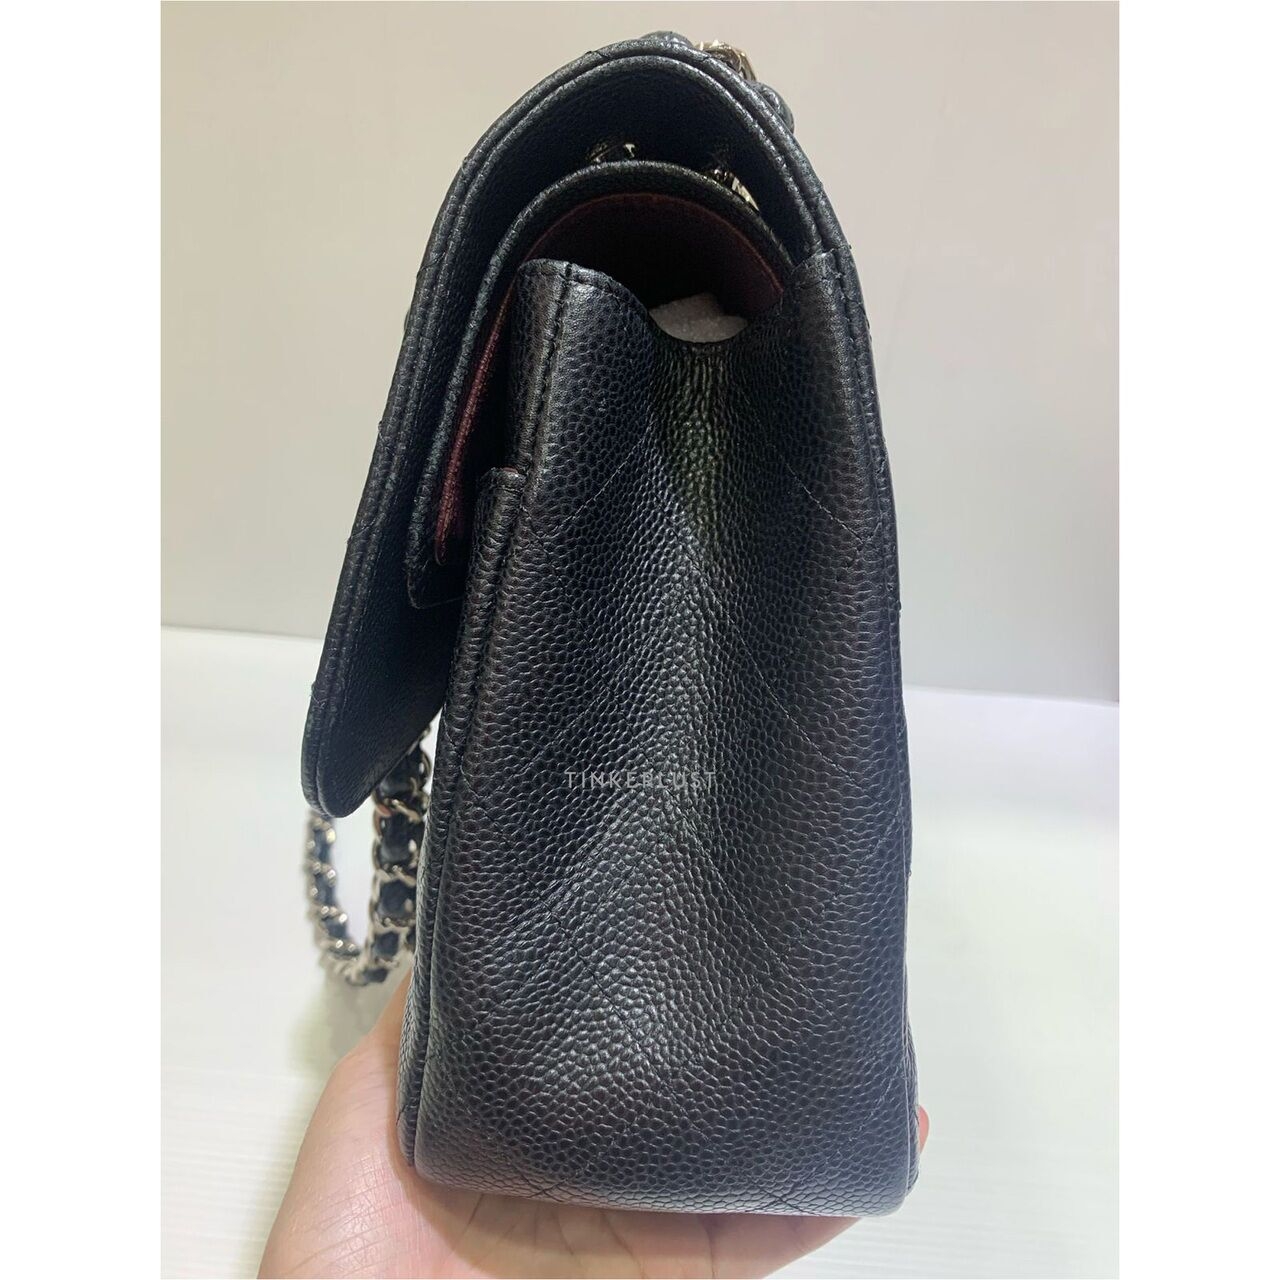 Chanel Classic Jumbo Double Flap Black Caviar SHW #19 Shoulder Bag